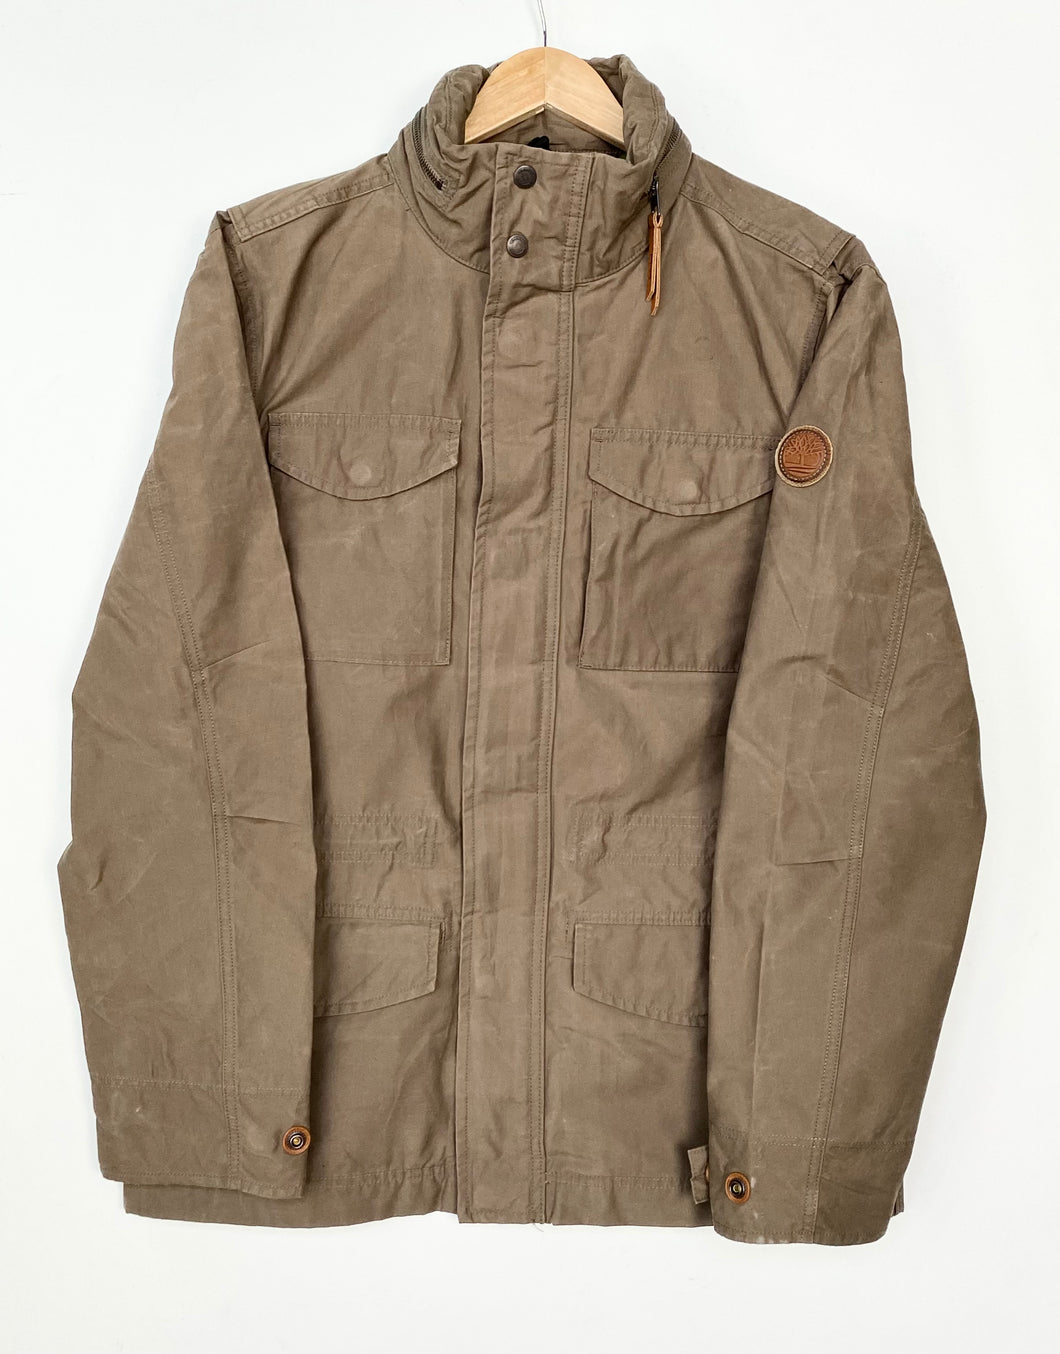 Timberland Military jacket (M)